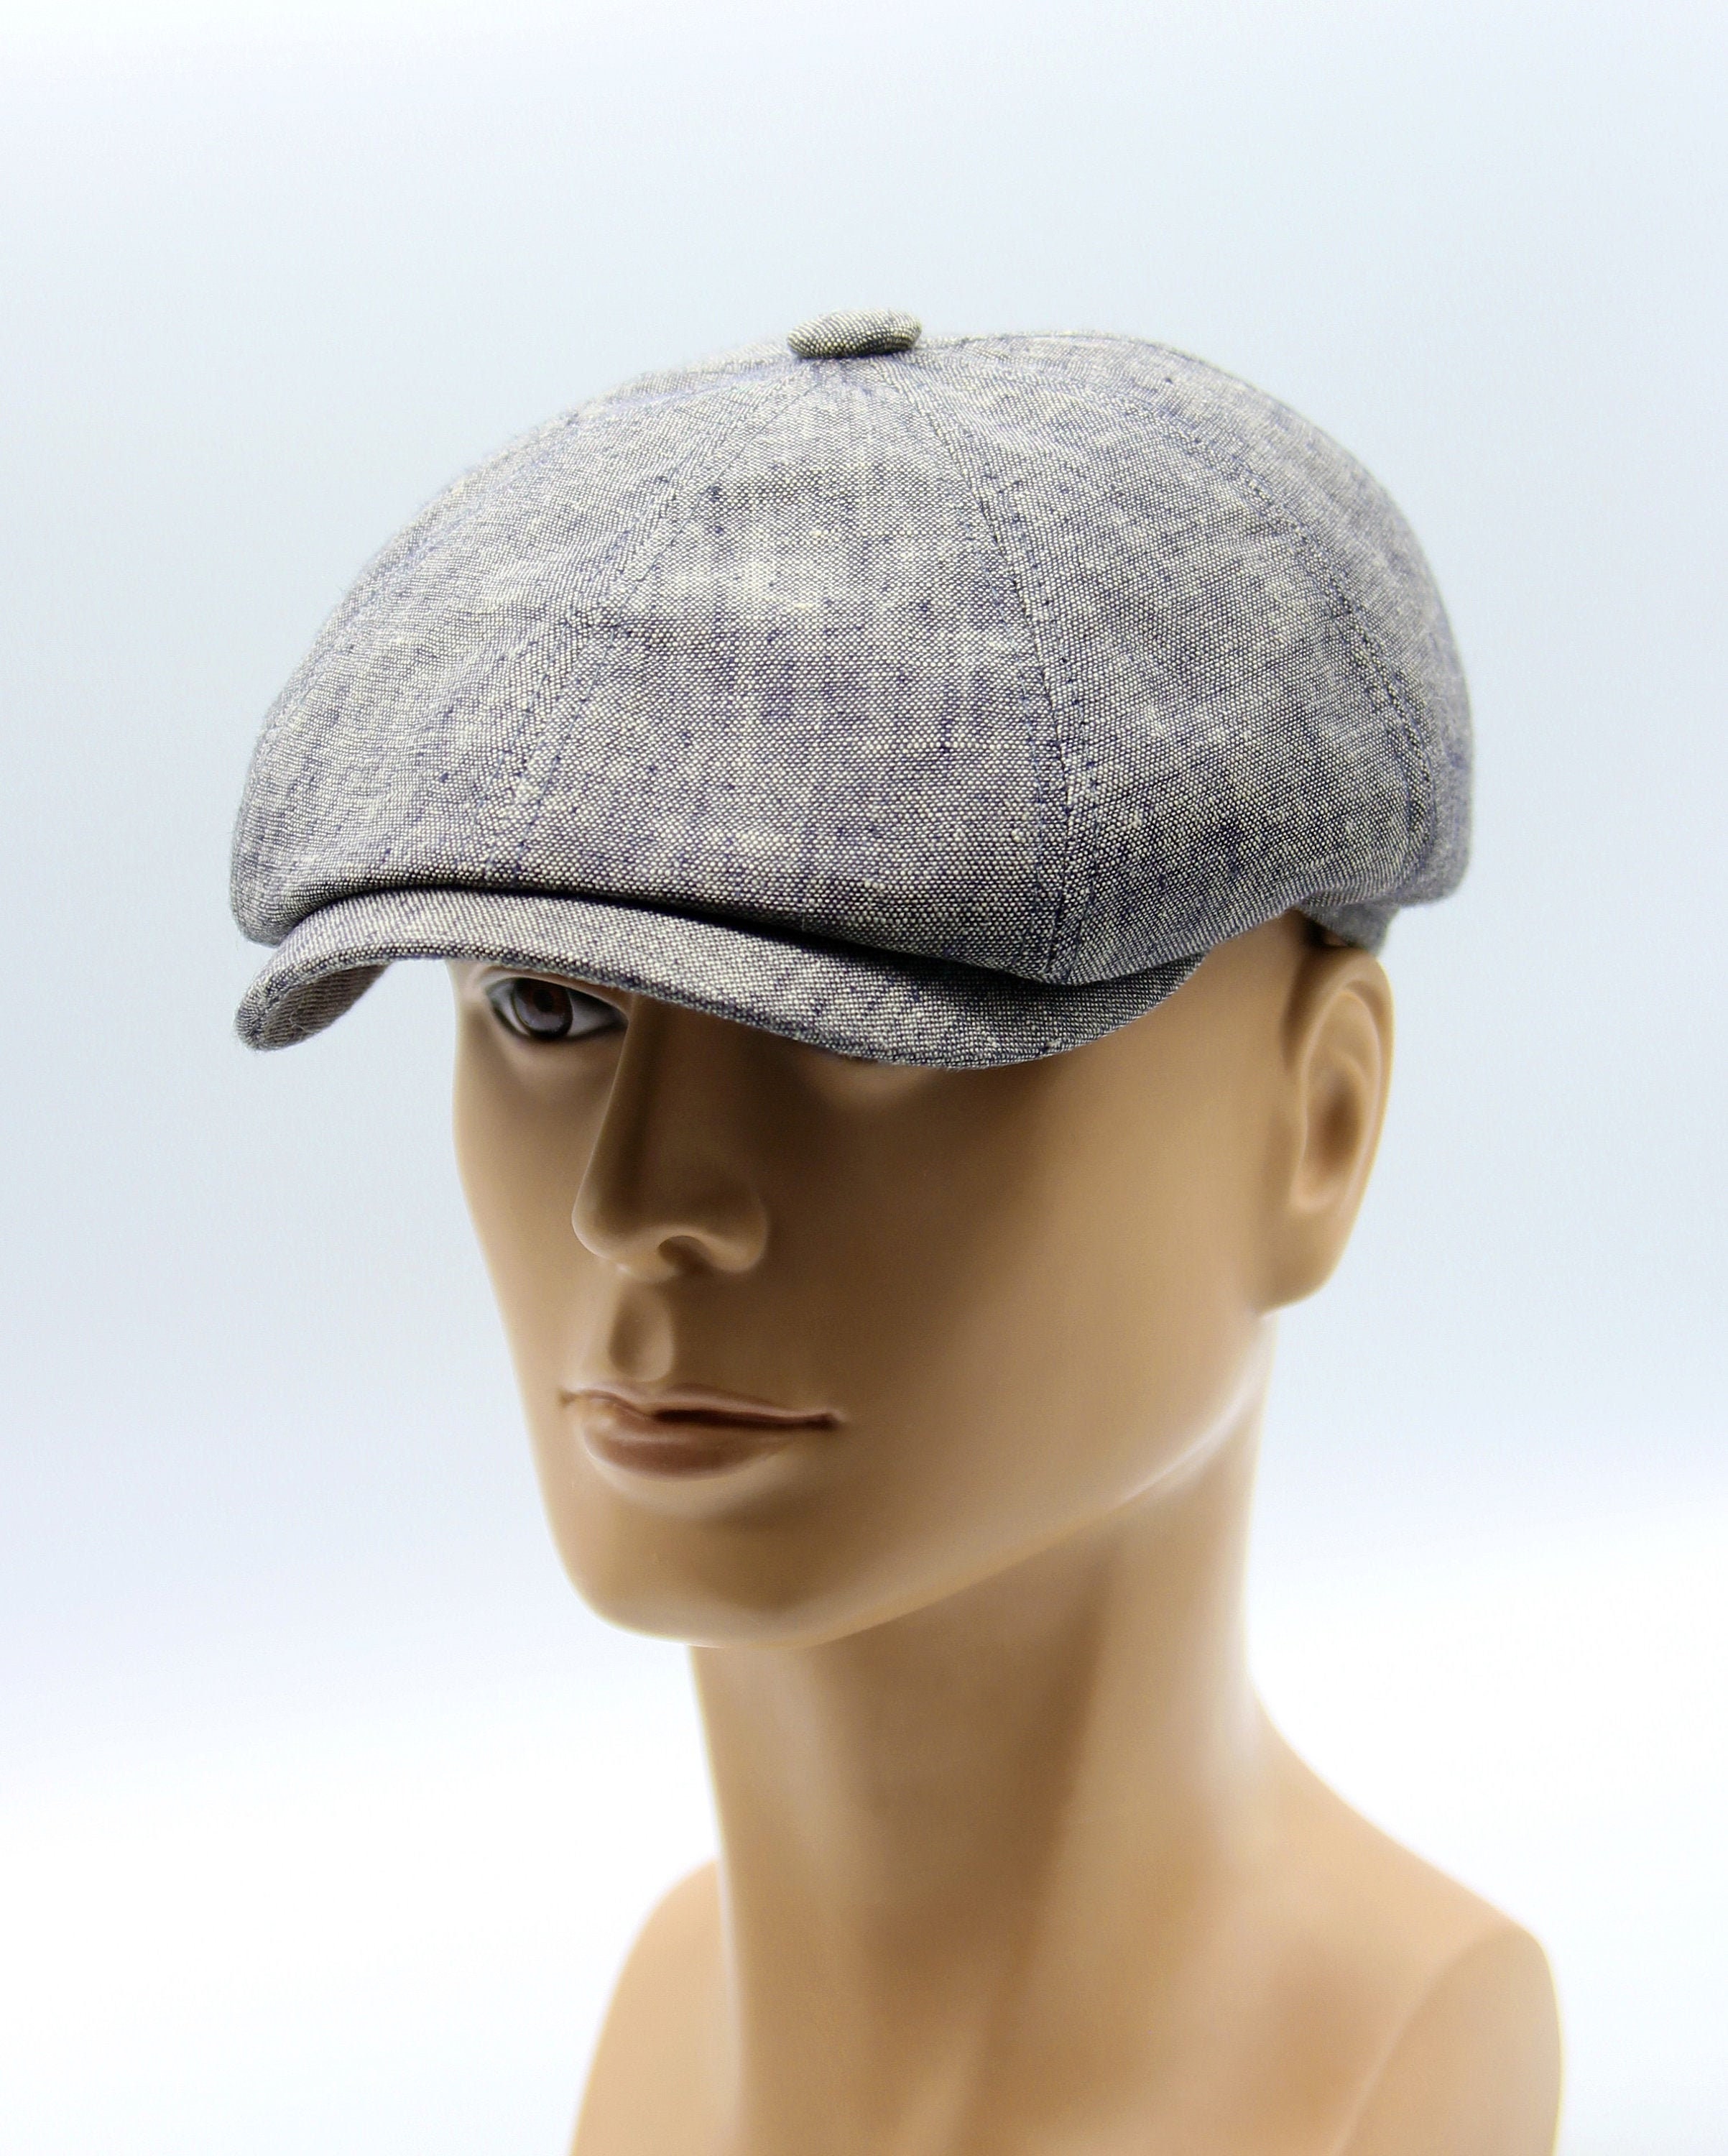 Men's Summer Linen Cap Best Newsboy Hat Grey - Etsy